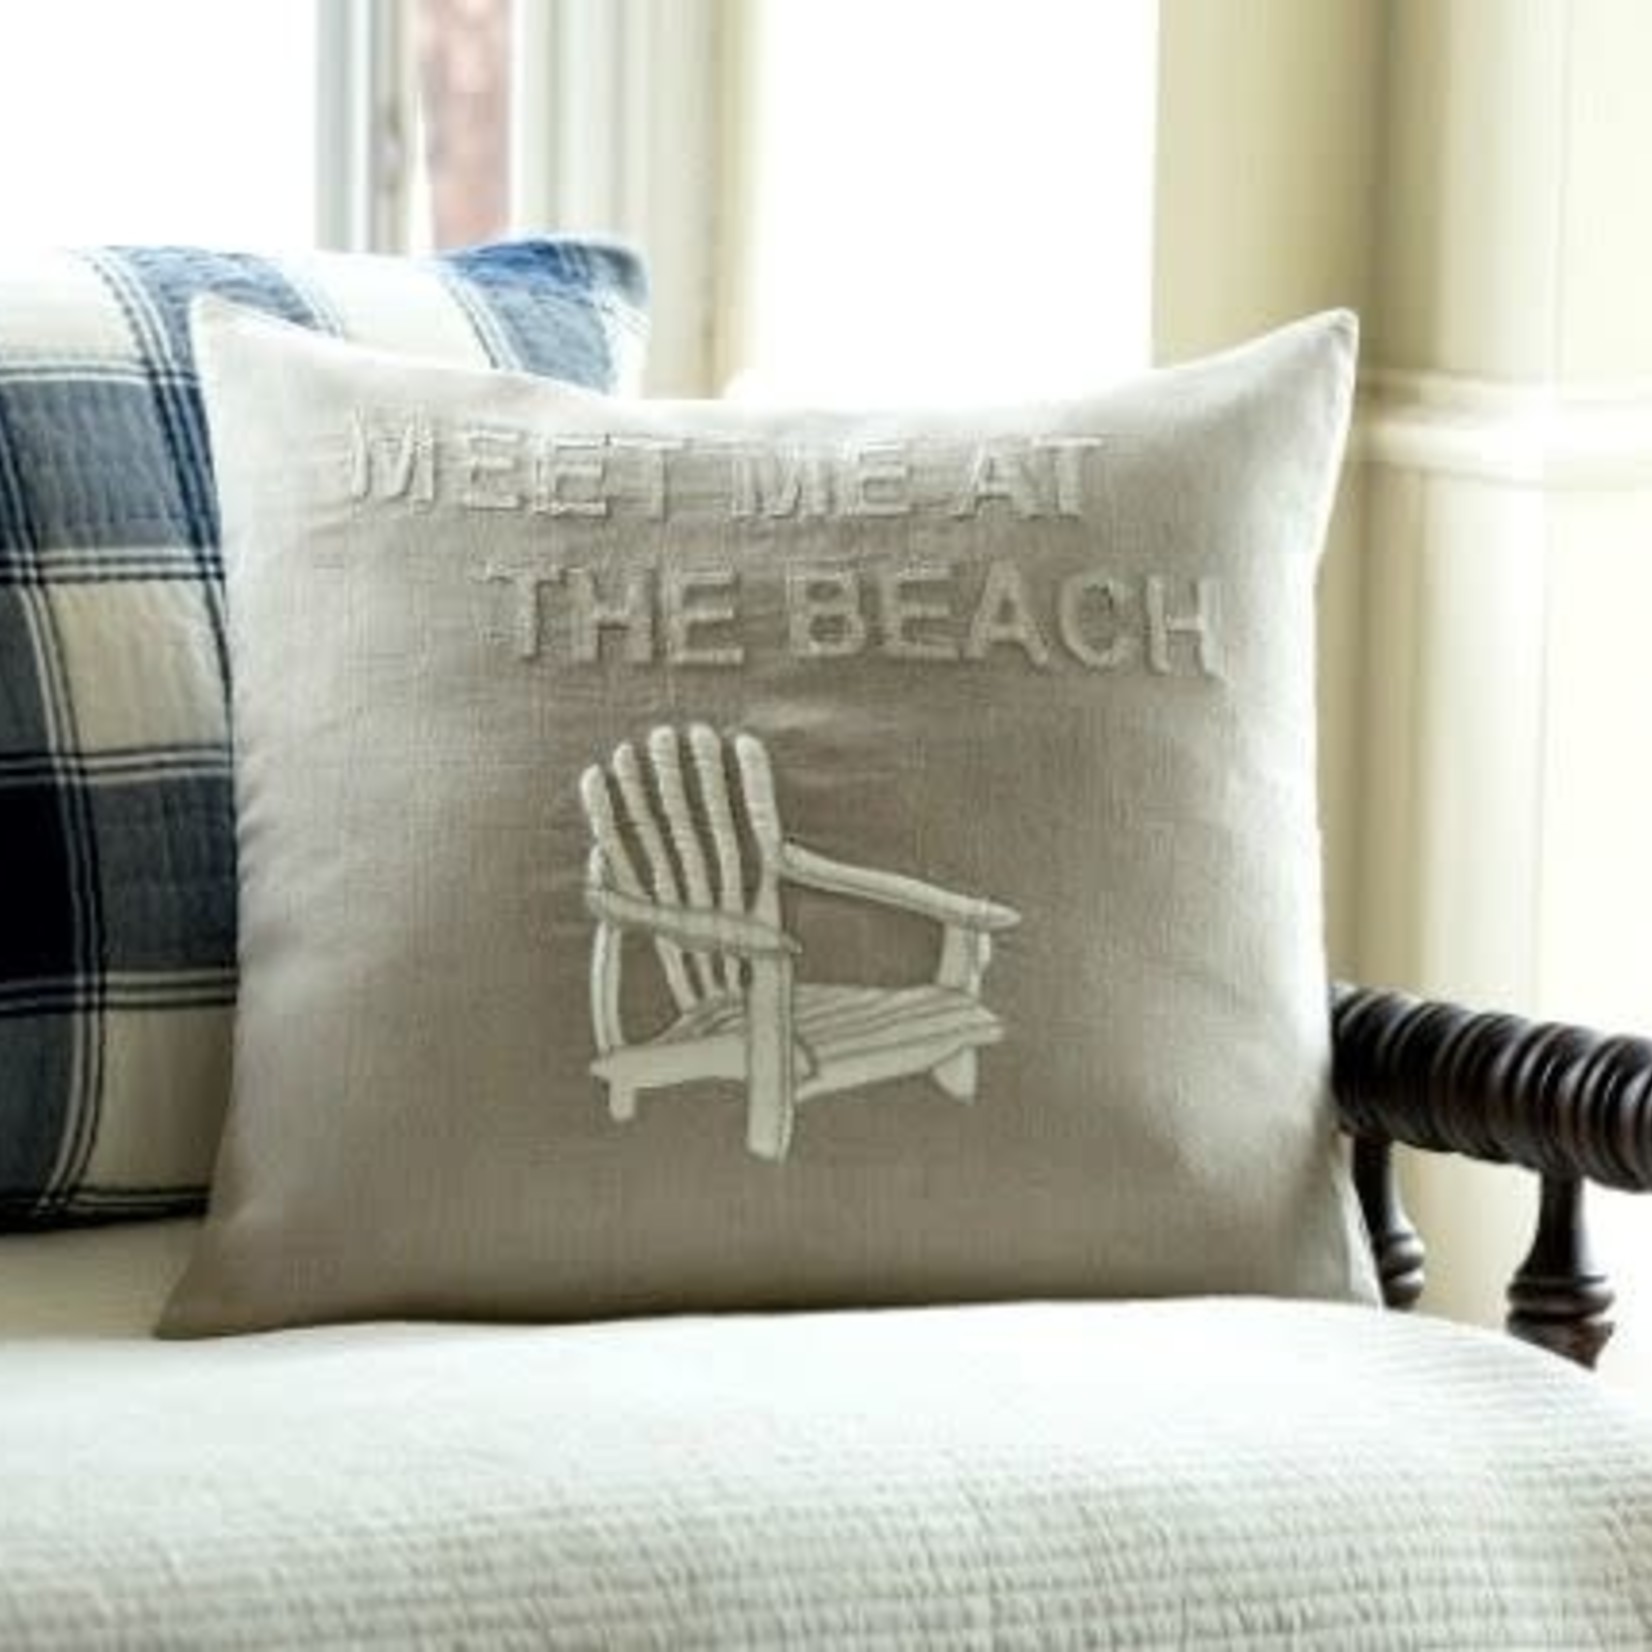 Meet Me at the Beach Natural Pillow 20x20